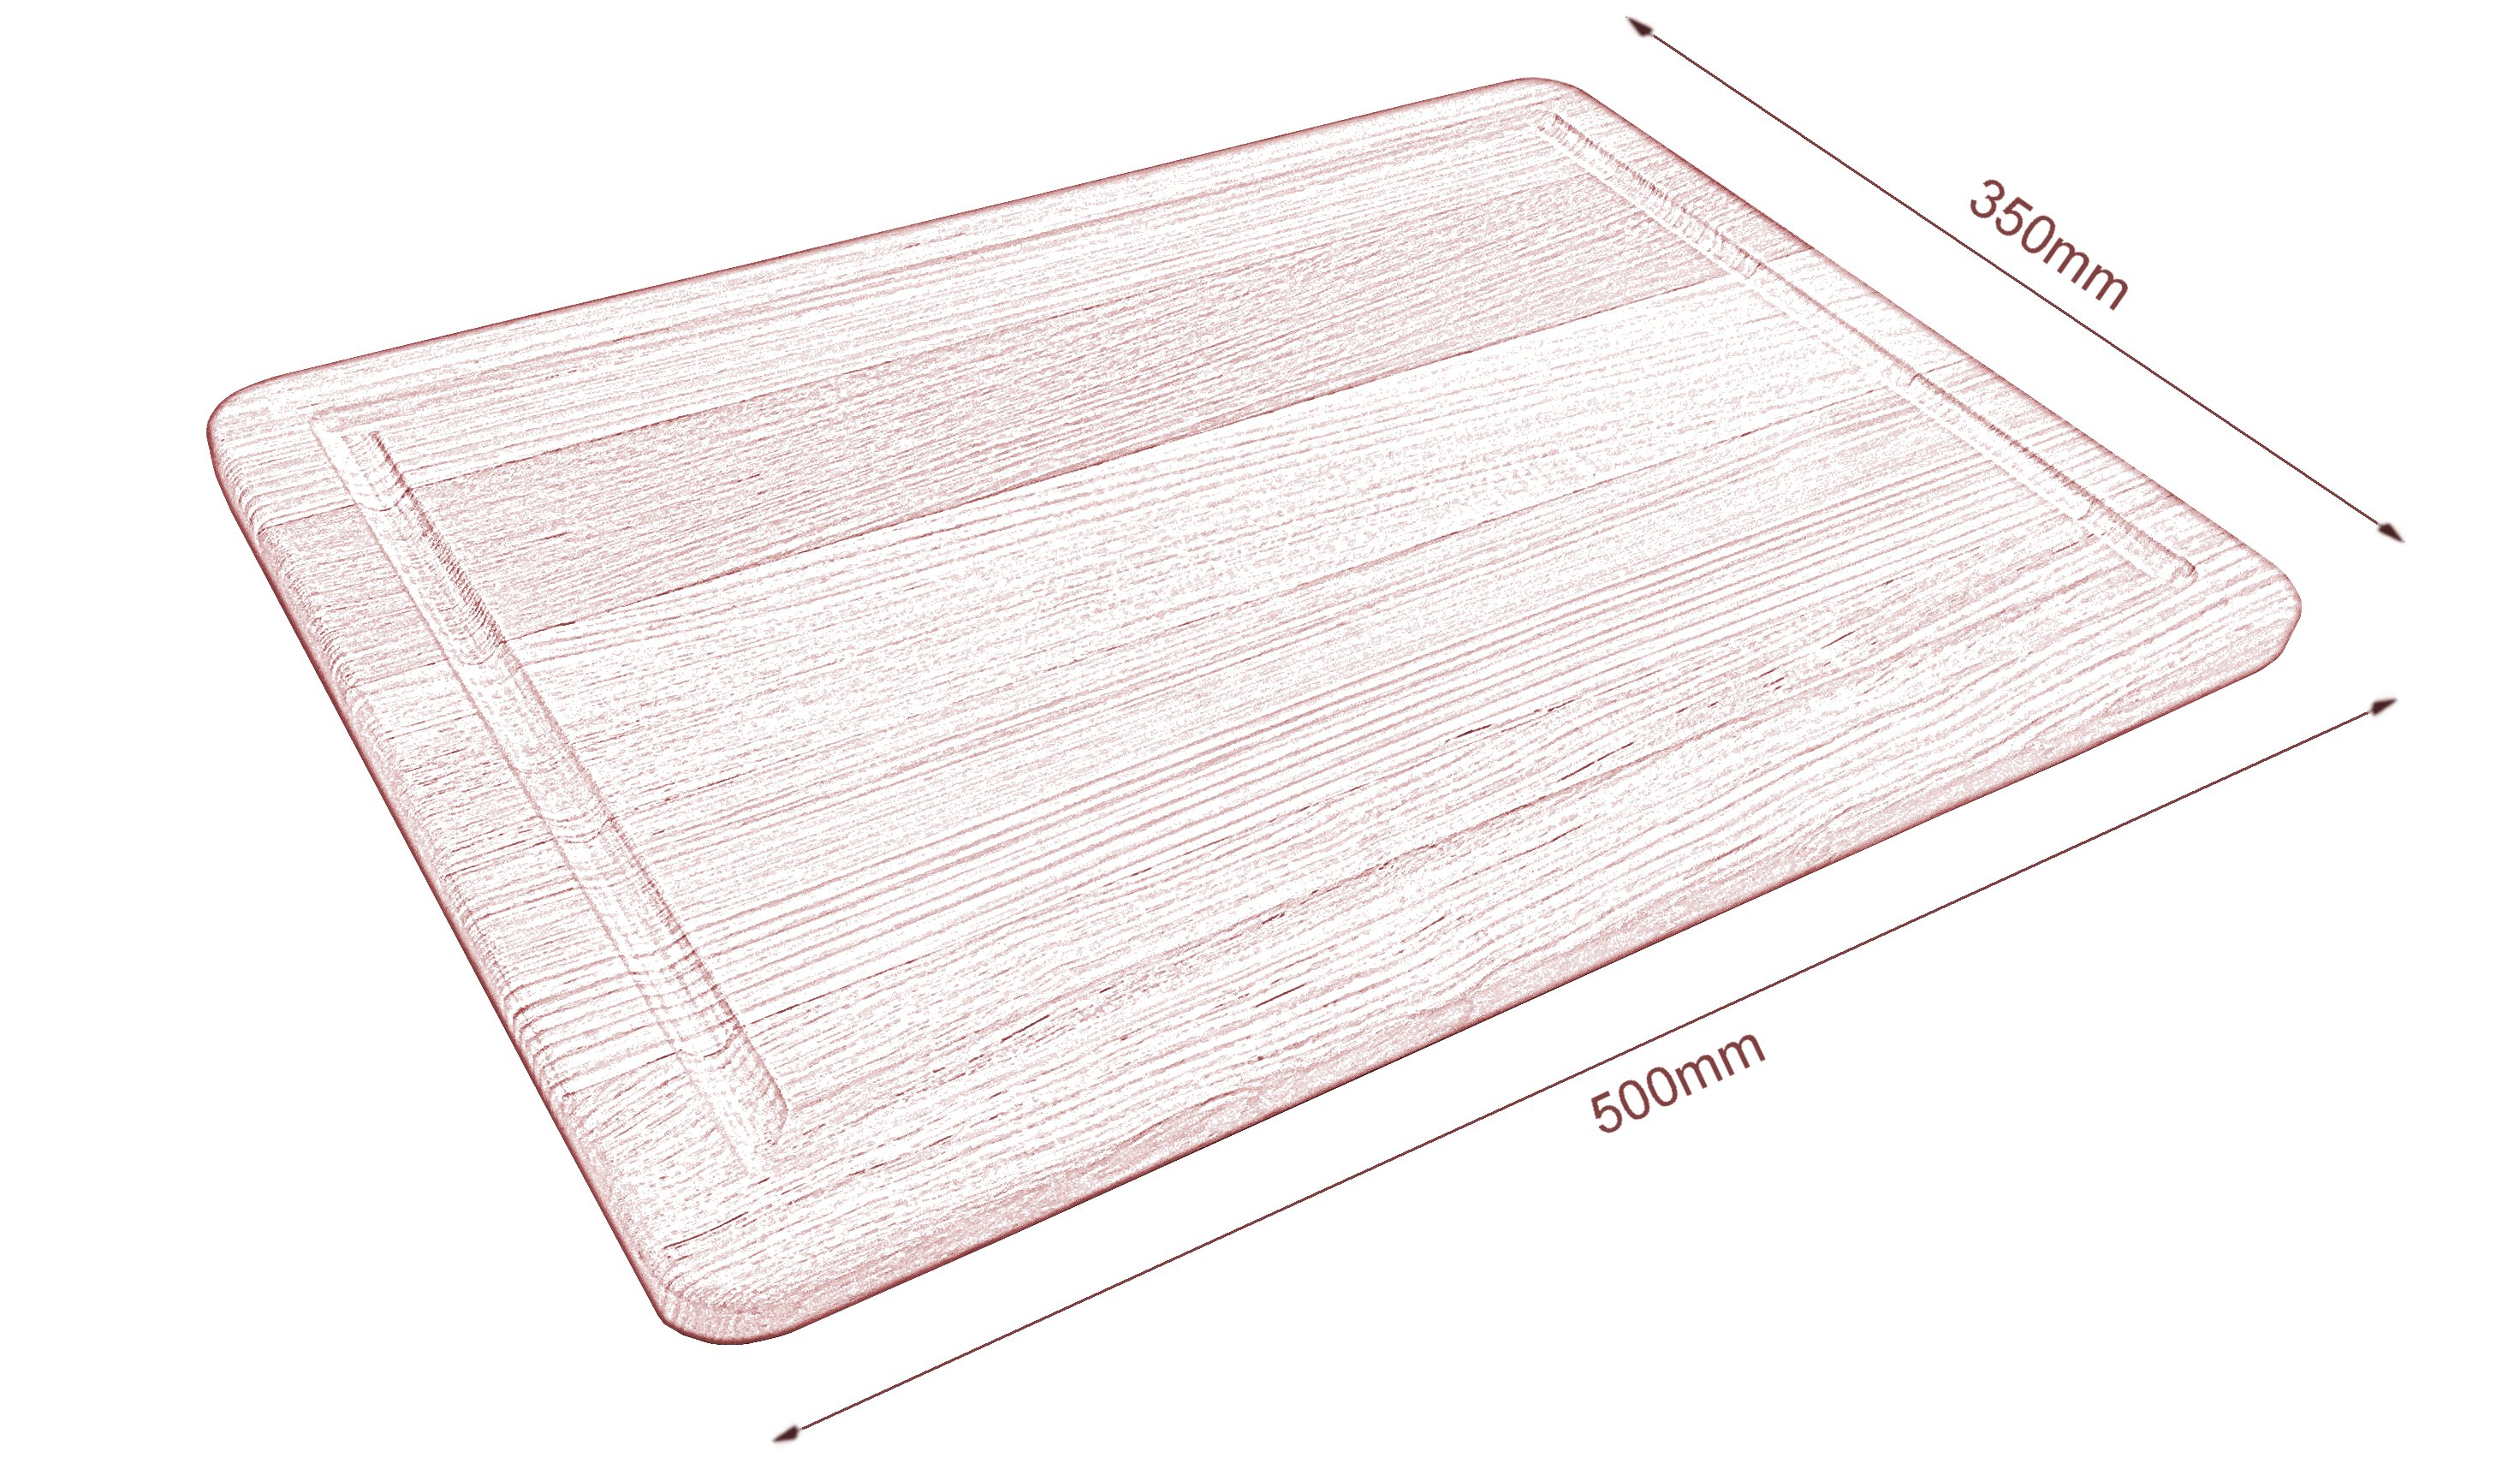 Sketch cutting board